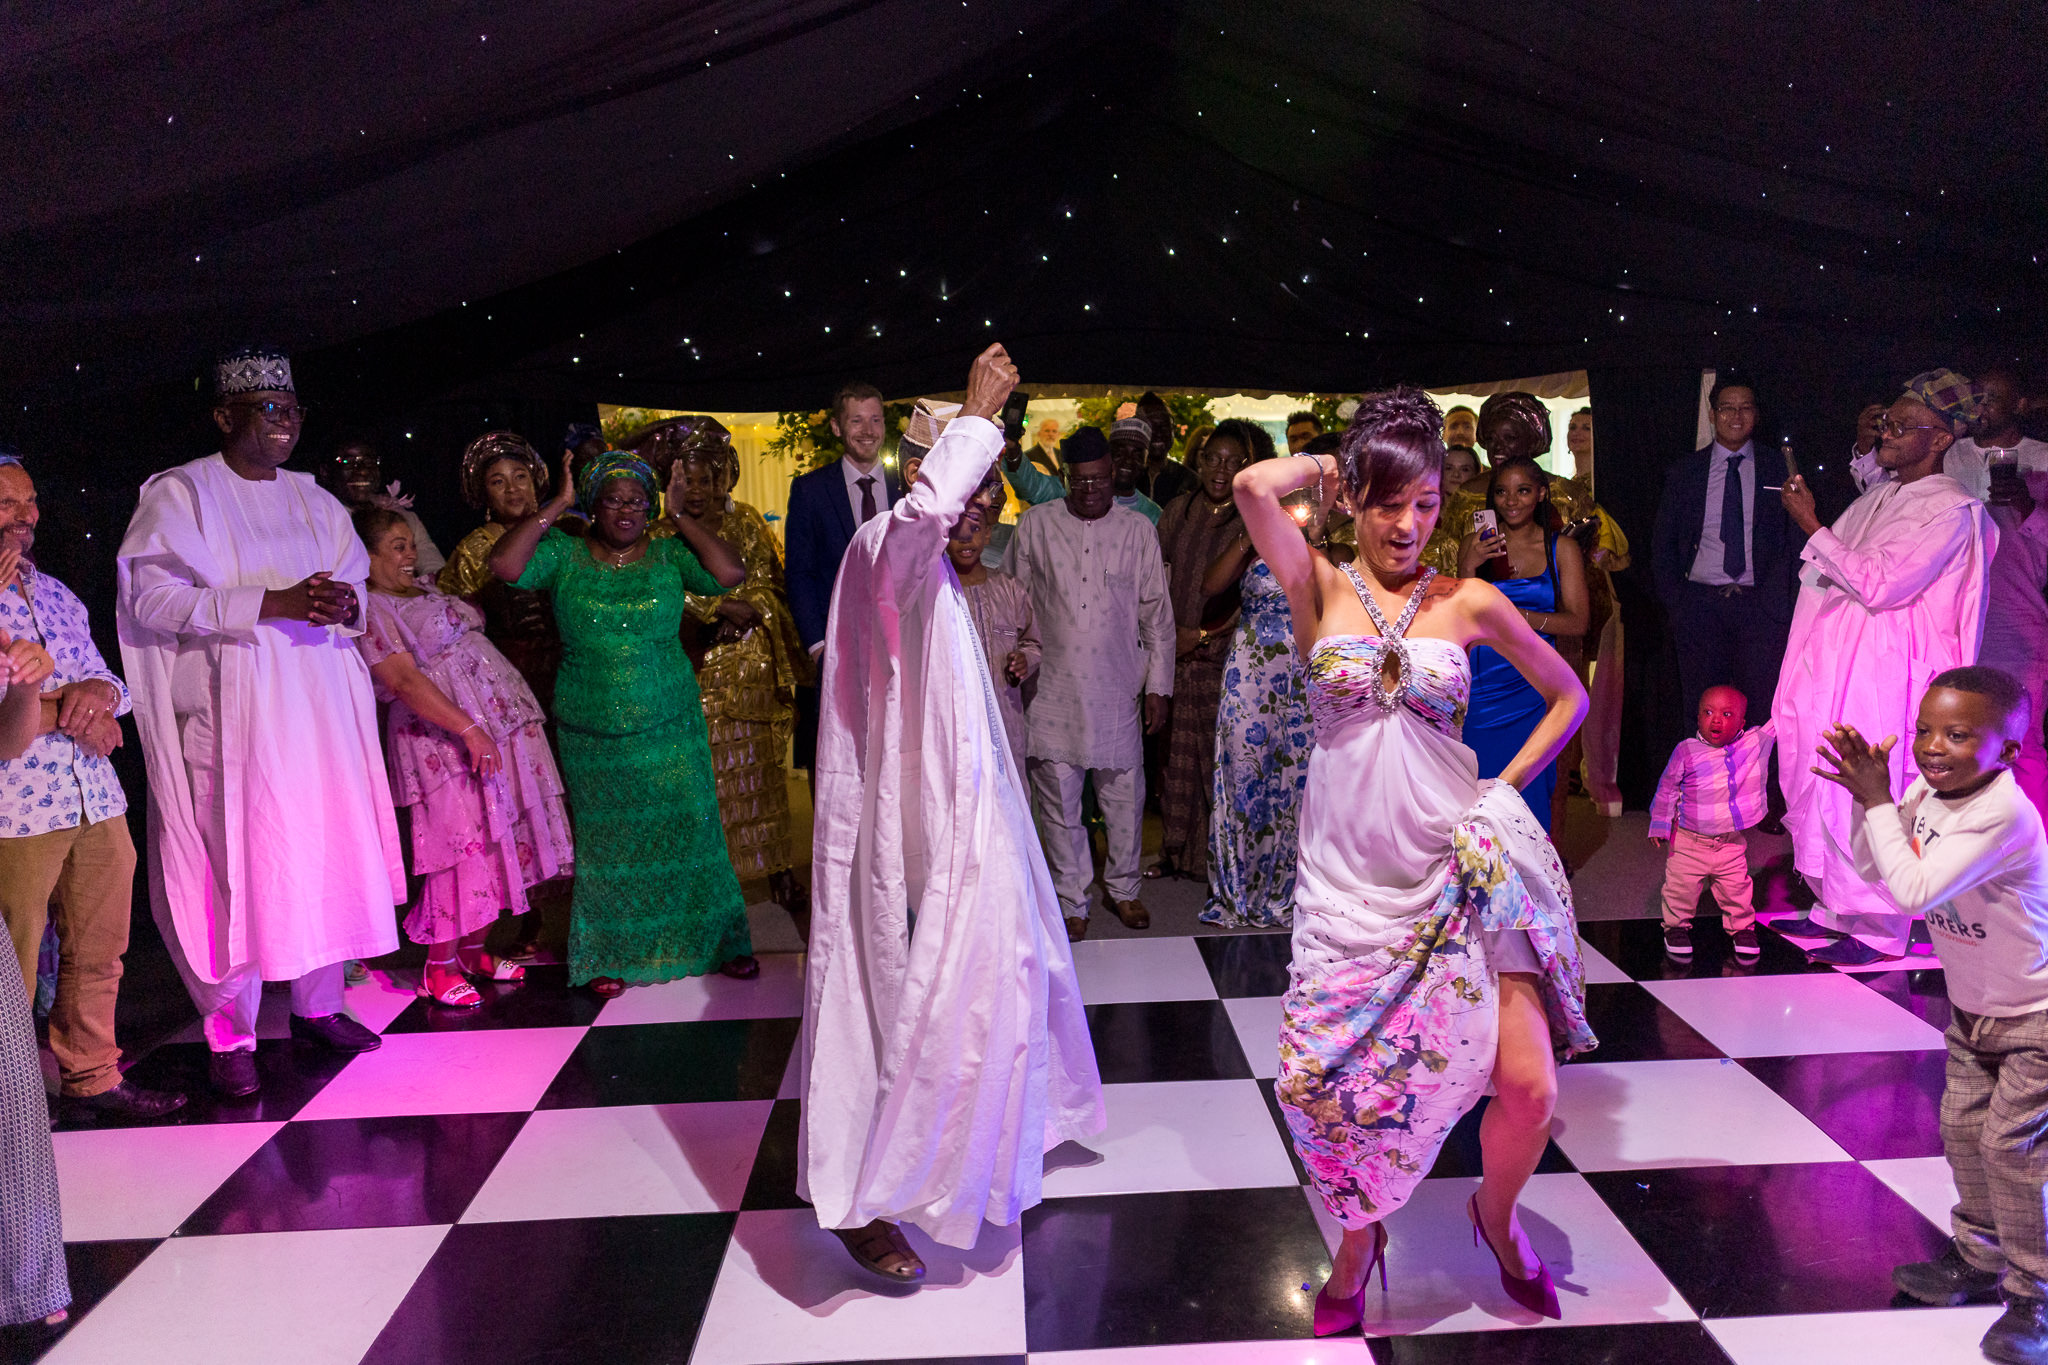 some wedding guests dance on the dance floor